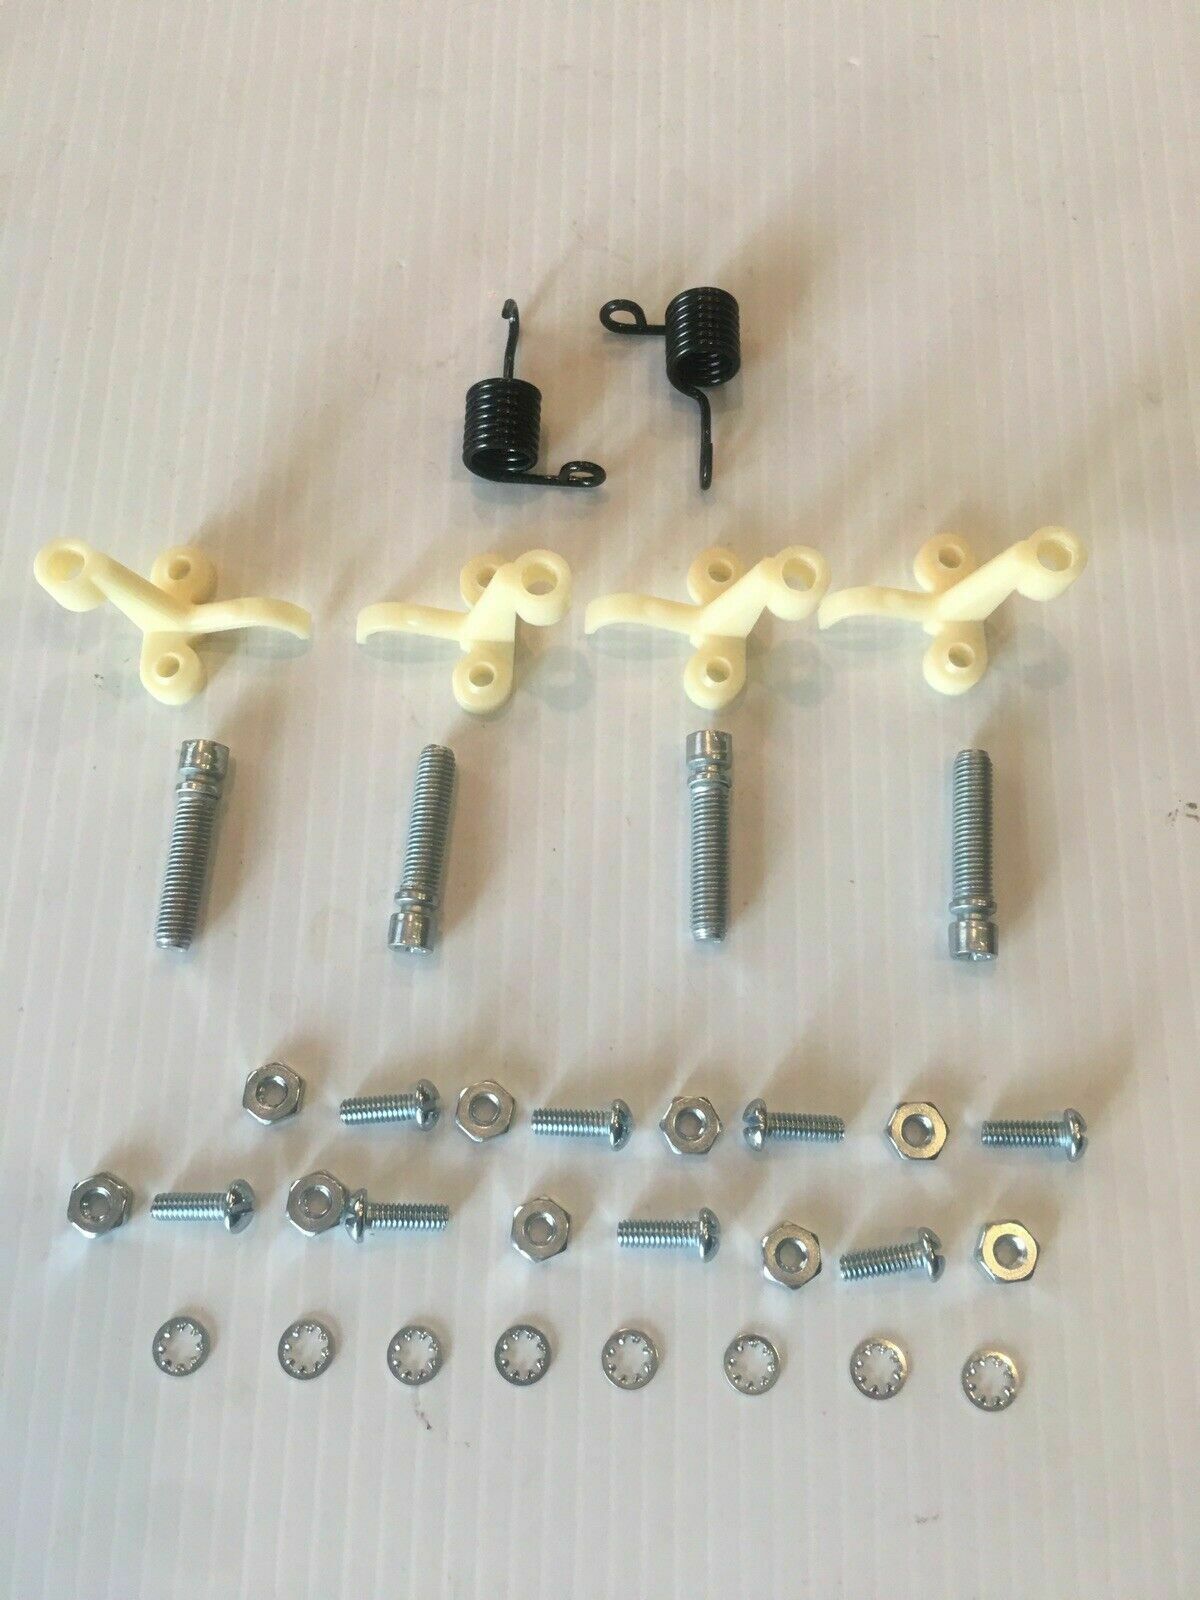 screws: 1958 - 1961 Cadillac Headlight Bucket Adjustment Screws Kits De Ville